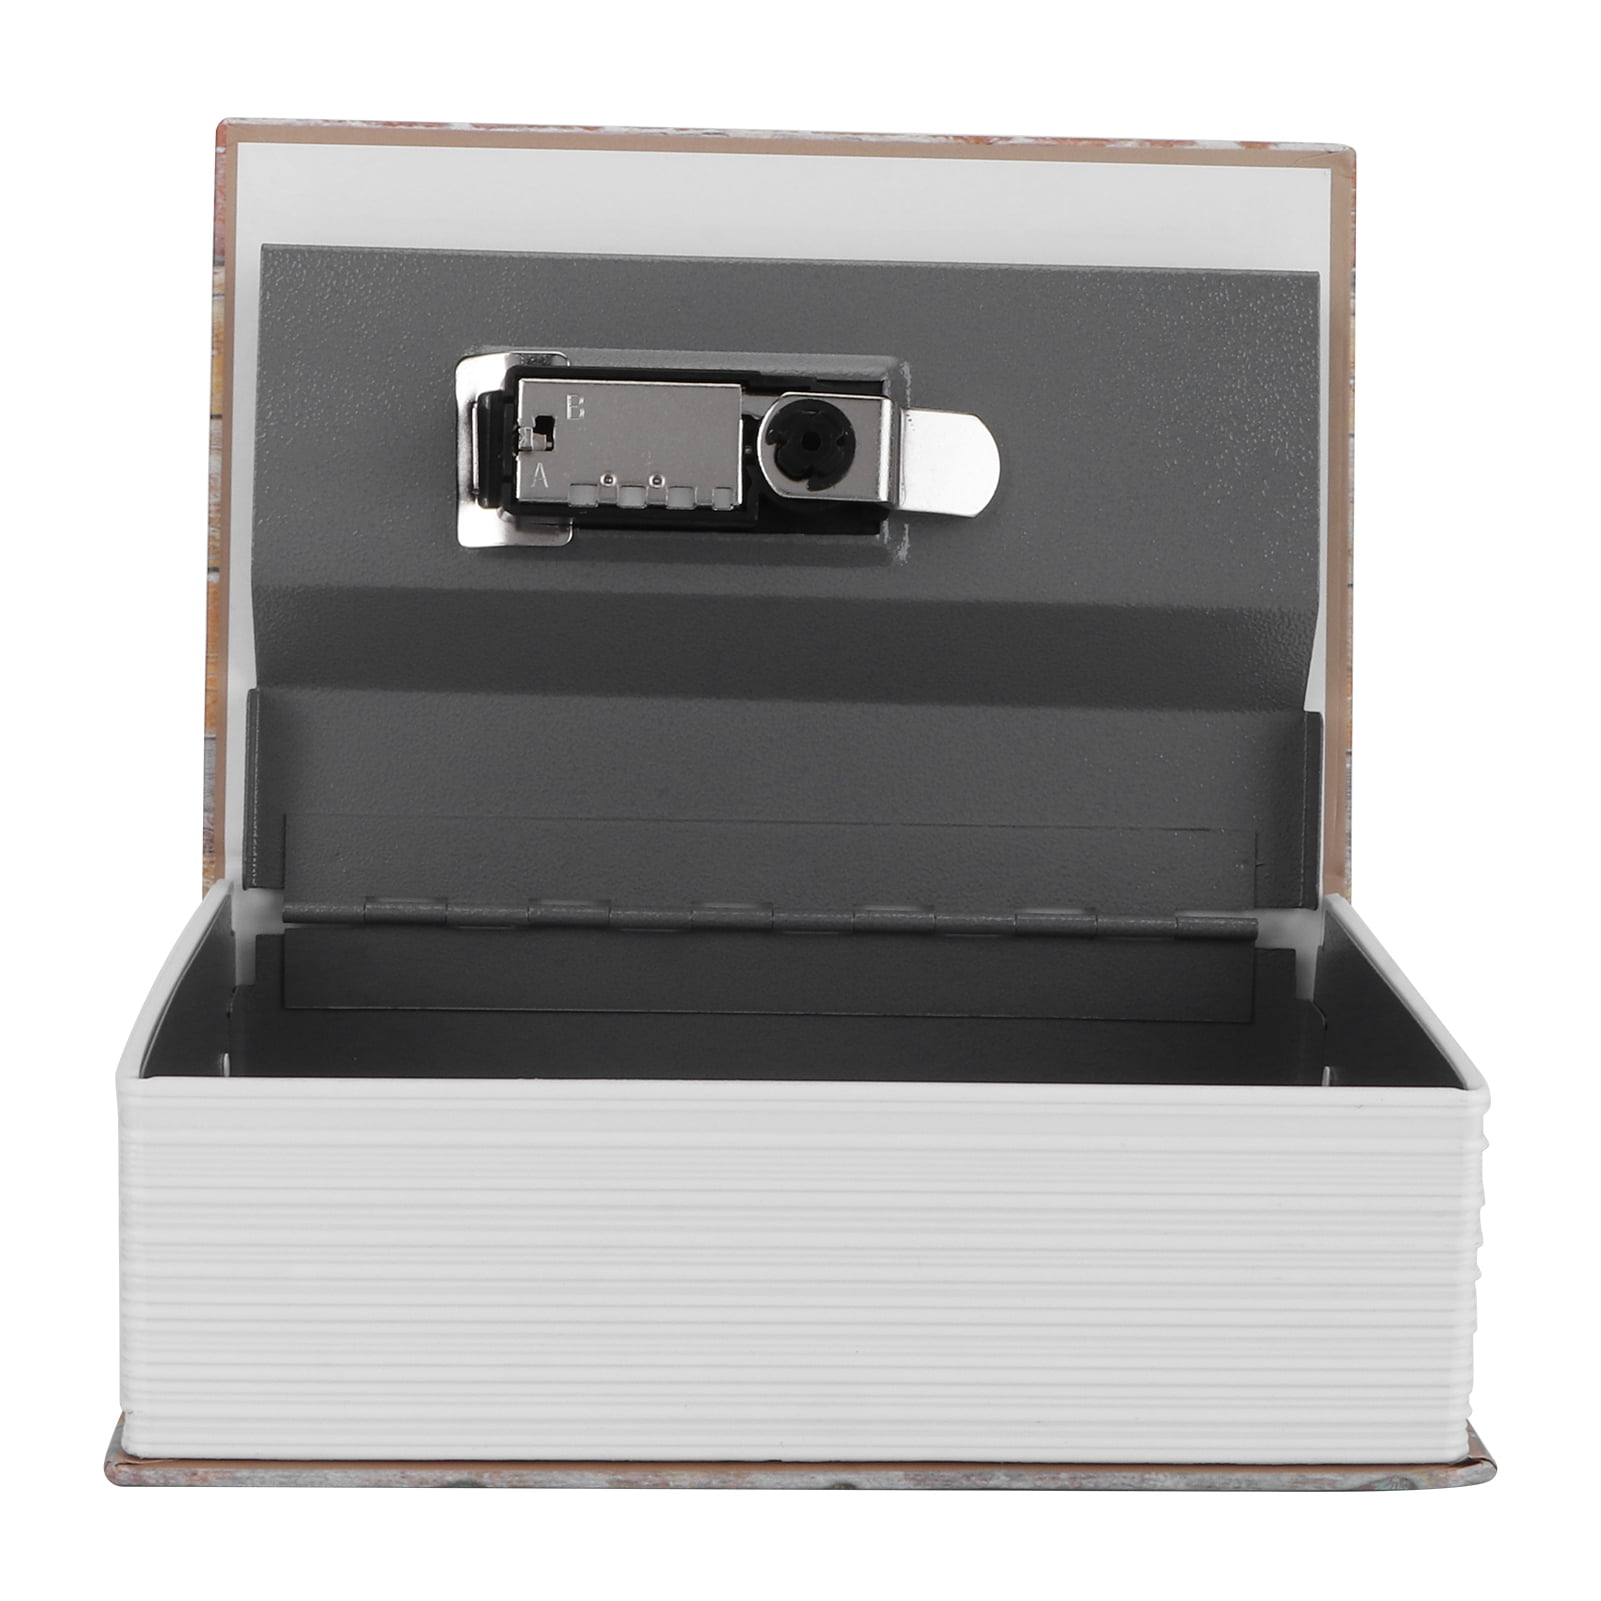 Lock Case Money Storage Box with Keys Simulation Book Safe Storage Box for Money Home Cash Office 